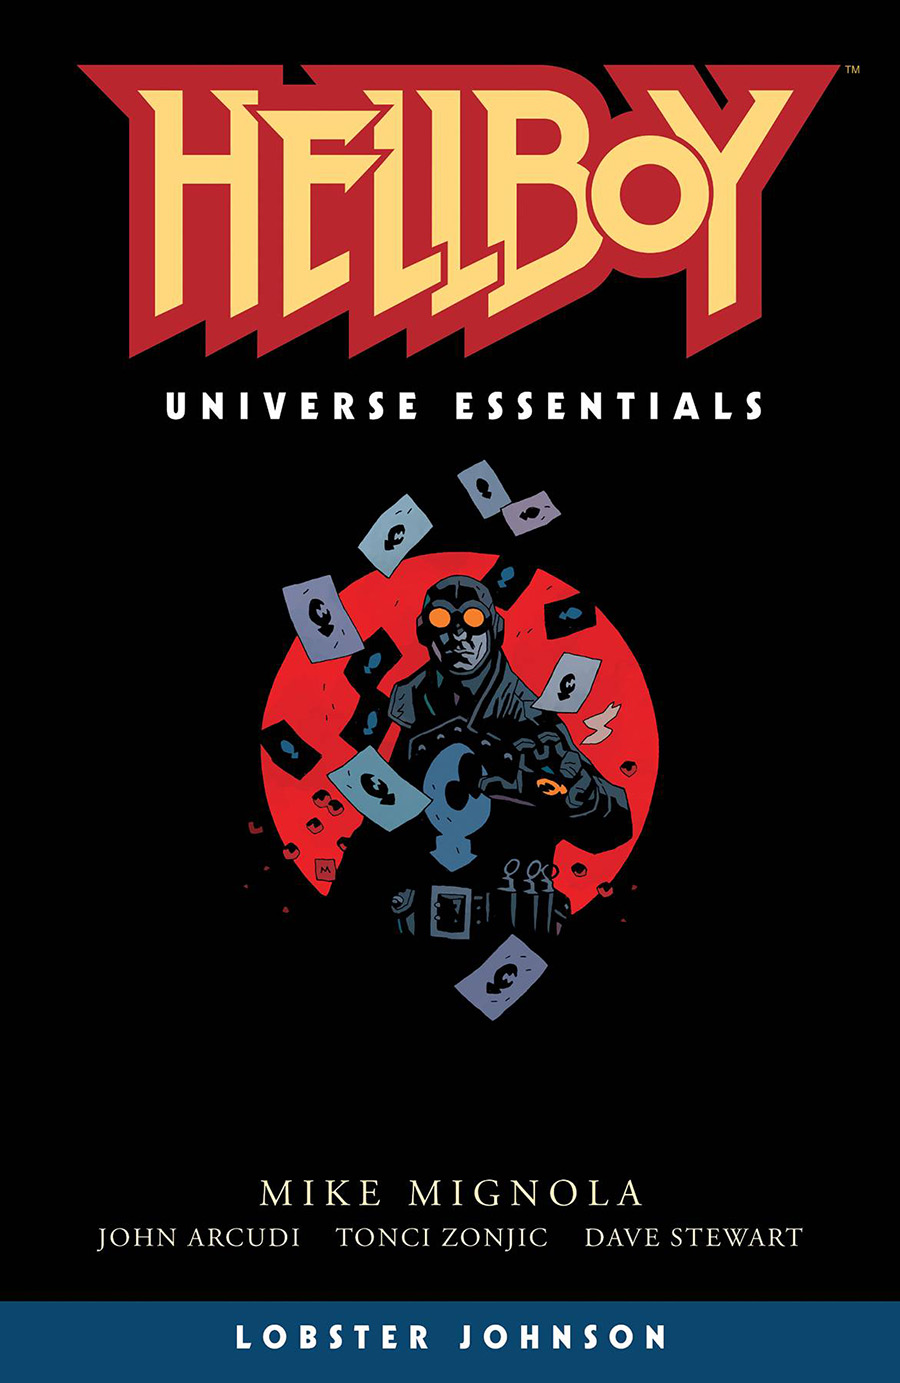 Hellboy Universe Essentials Lobster Johnson TP